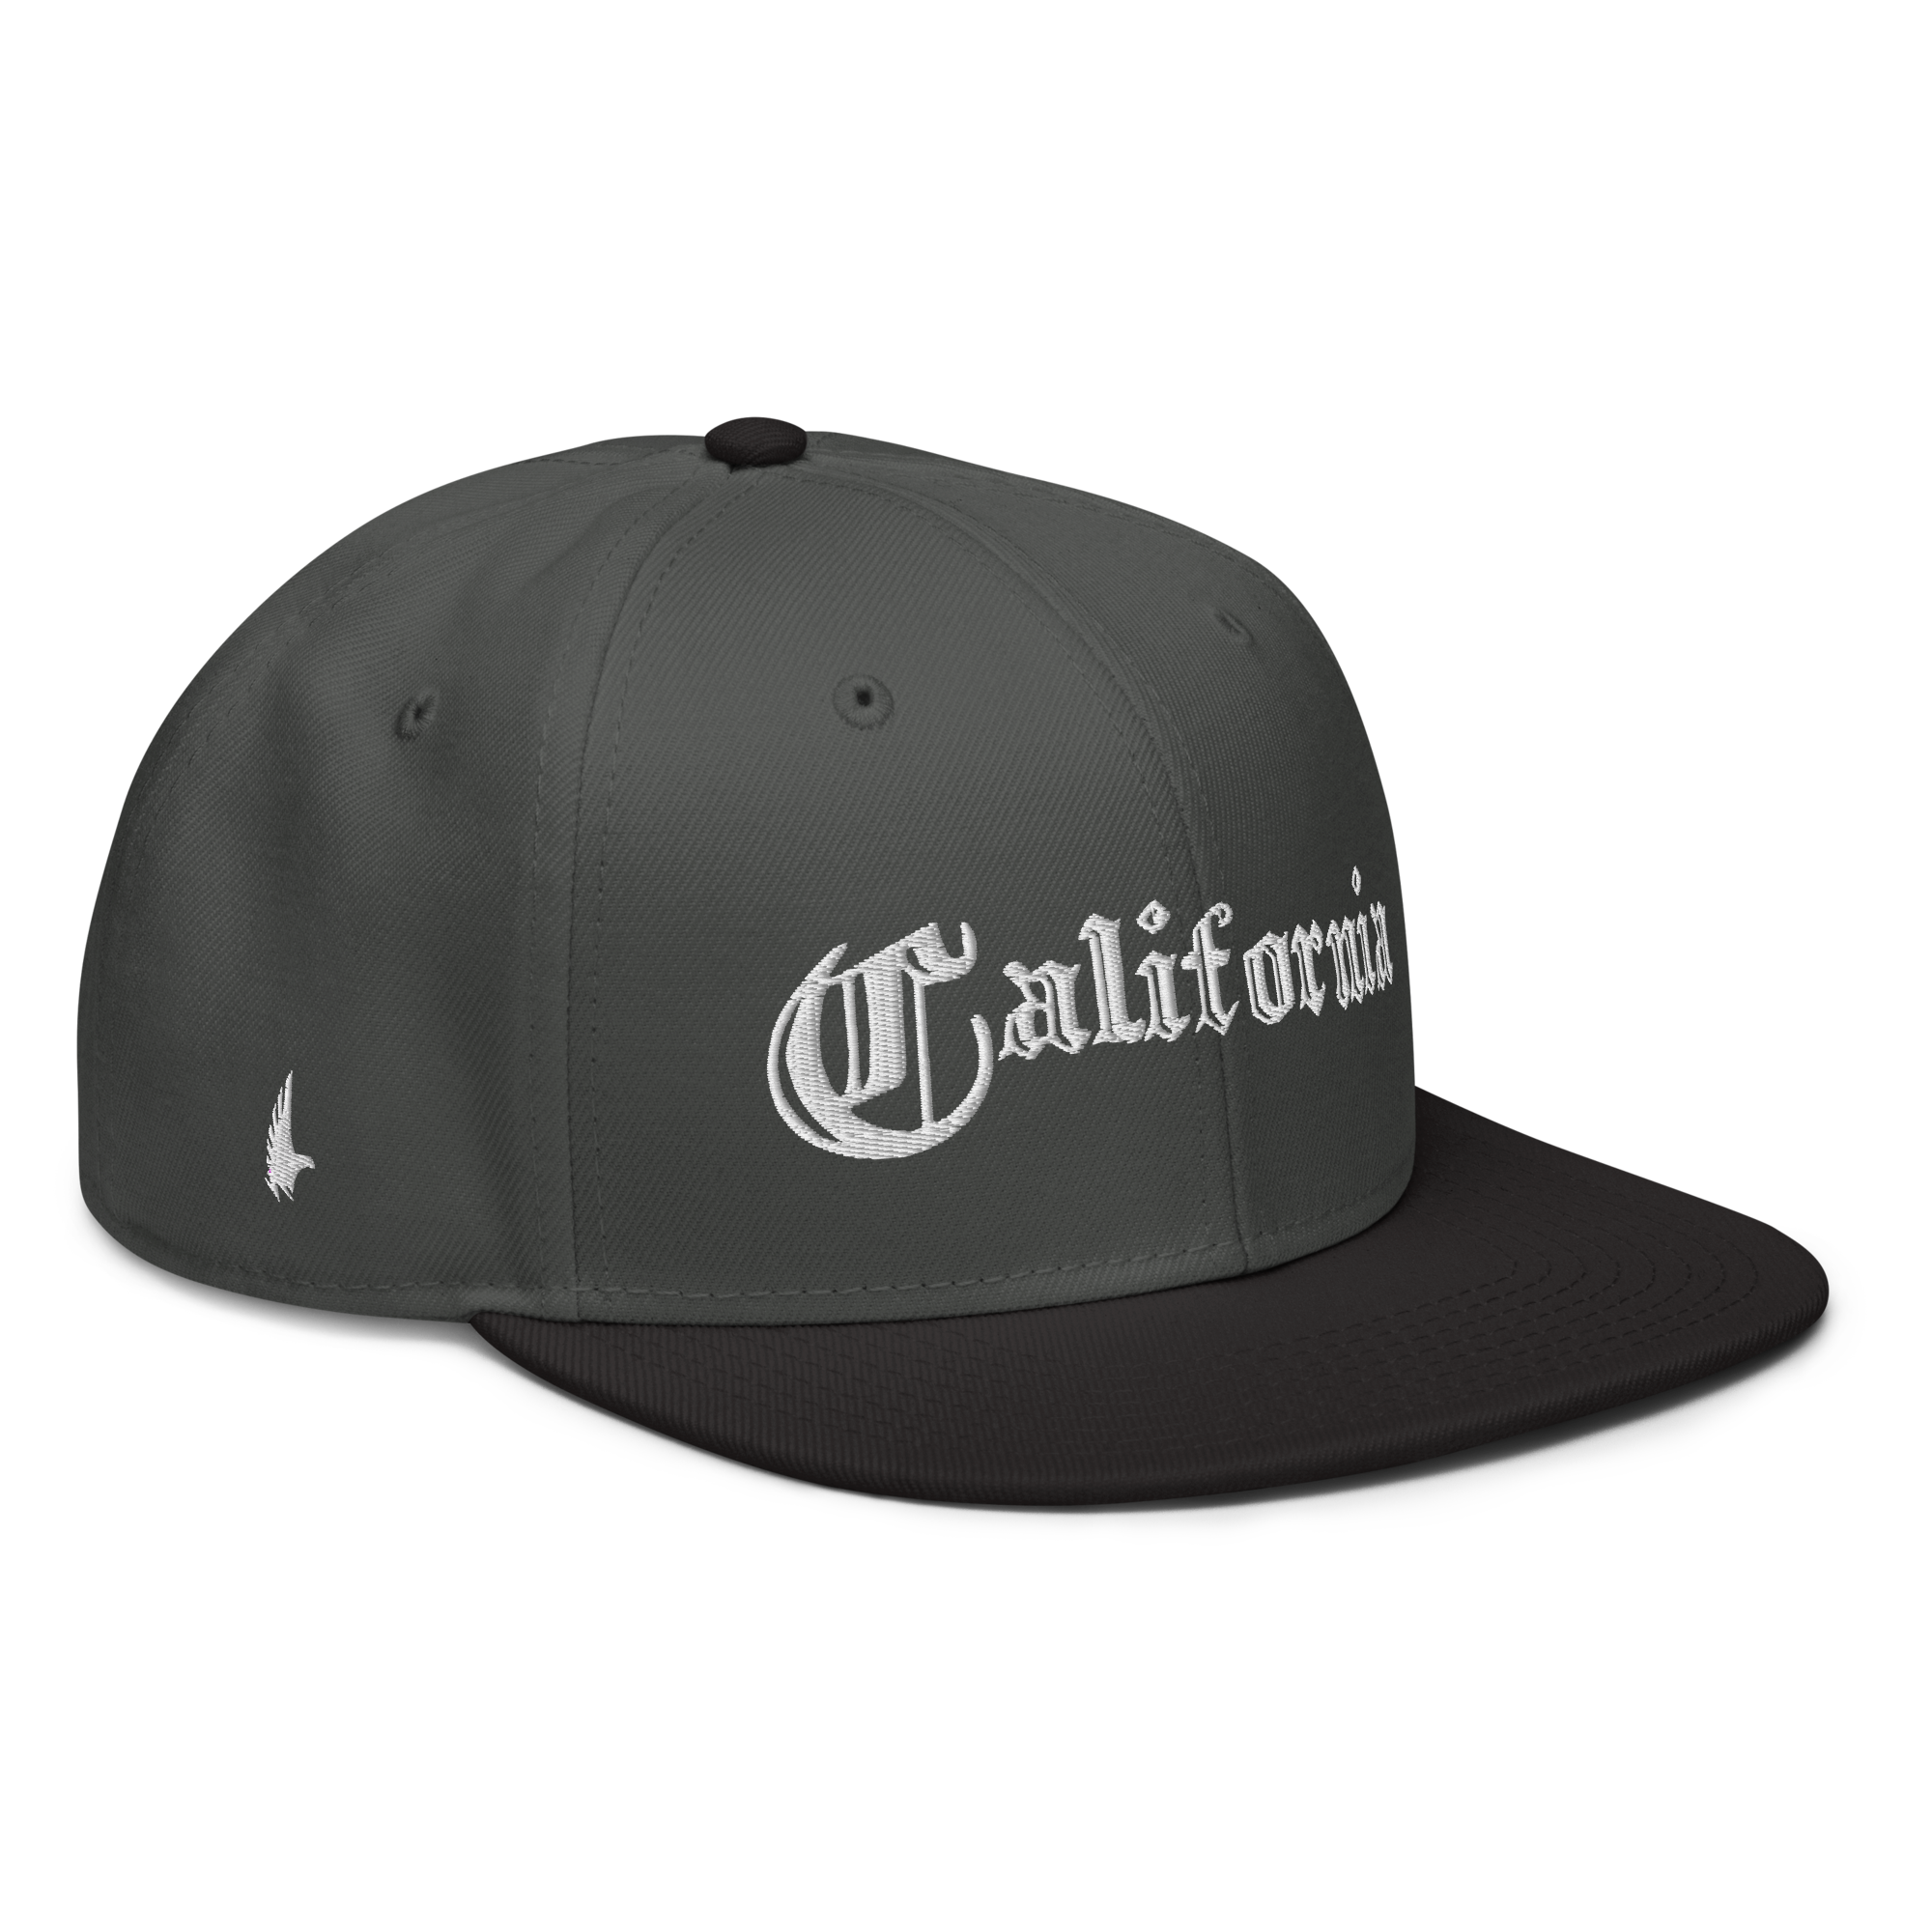 California Snapback Hat - Charcoal Grey / White / Black OS - Loyalty Vibes